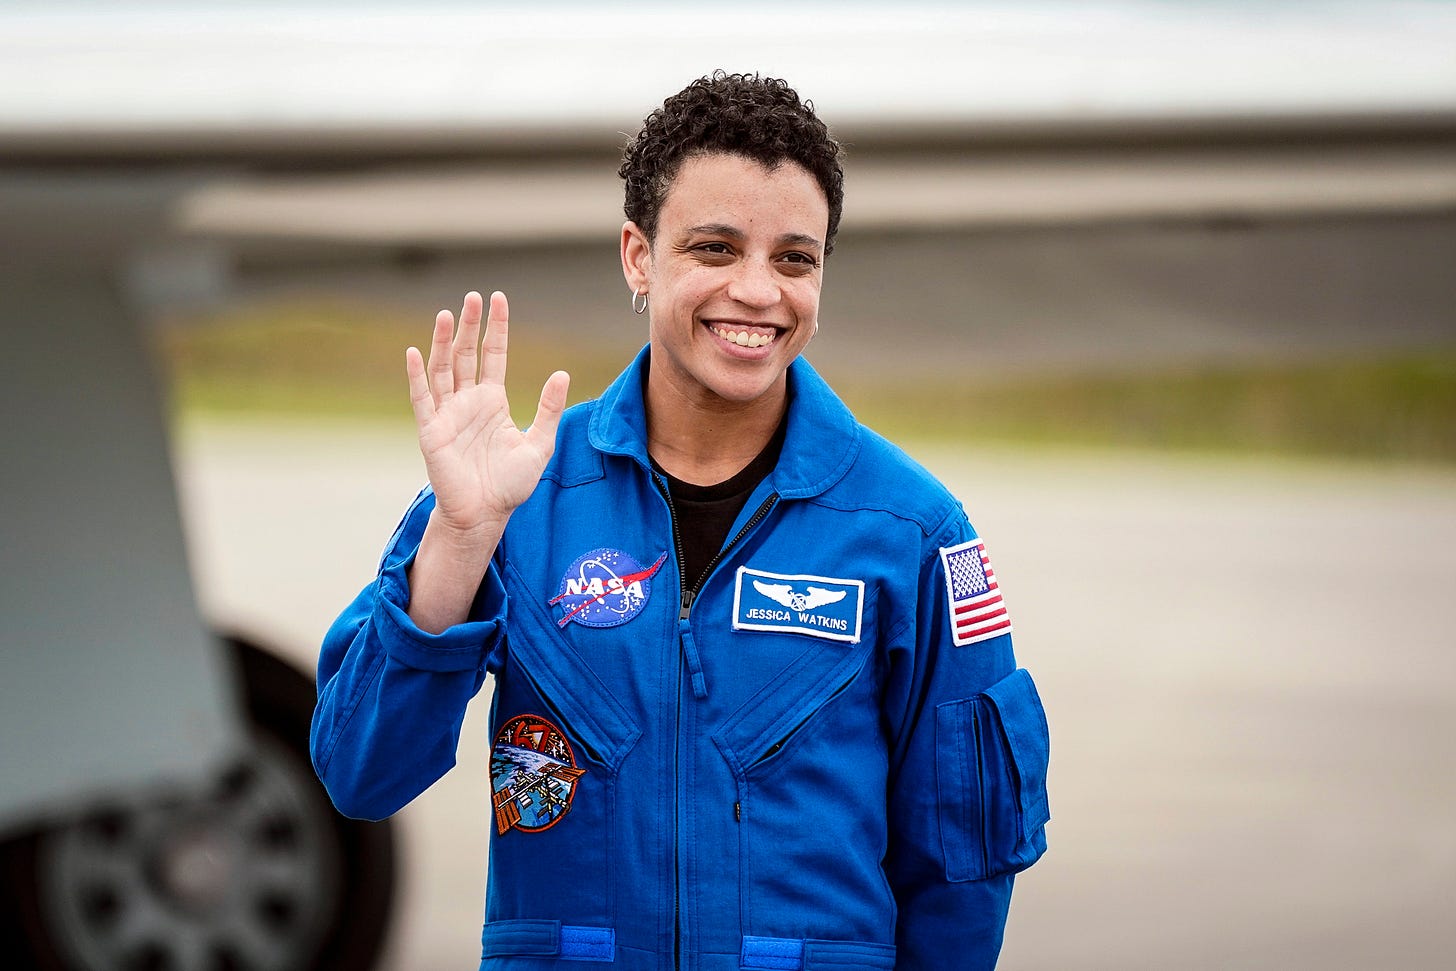 SpaceX Launch: Astronaut Jessica Watkins celebrates space 'milestone'